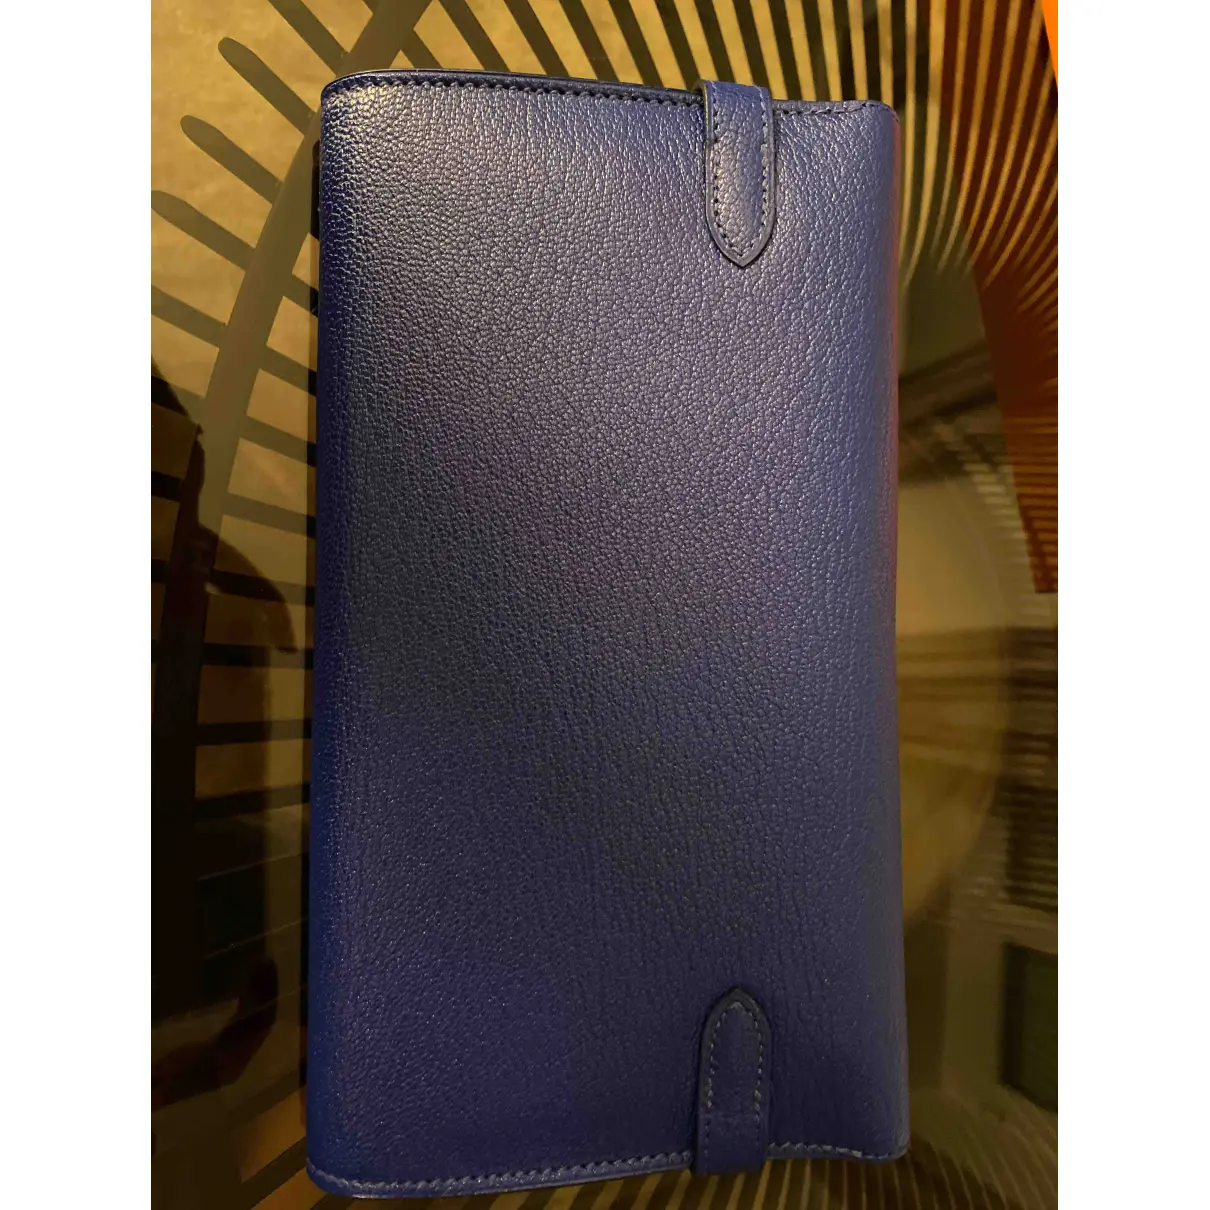 Buy Hermès Kelly leather wallet online